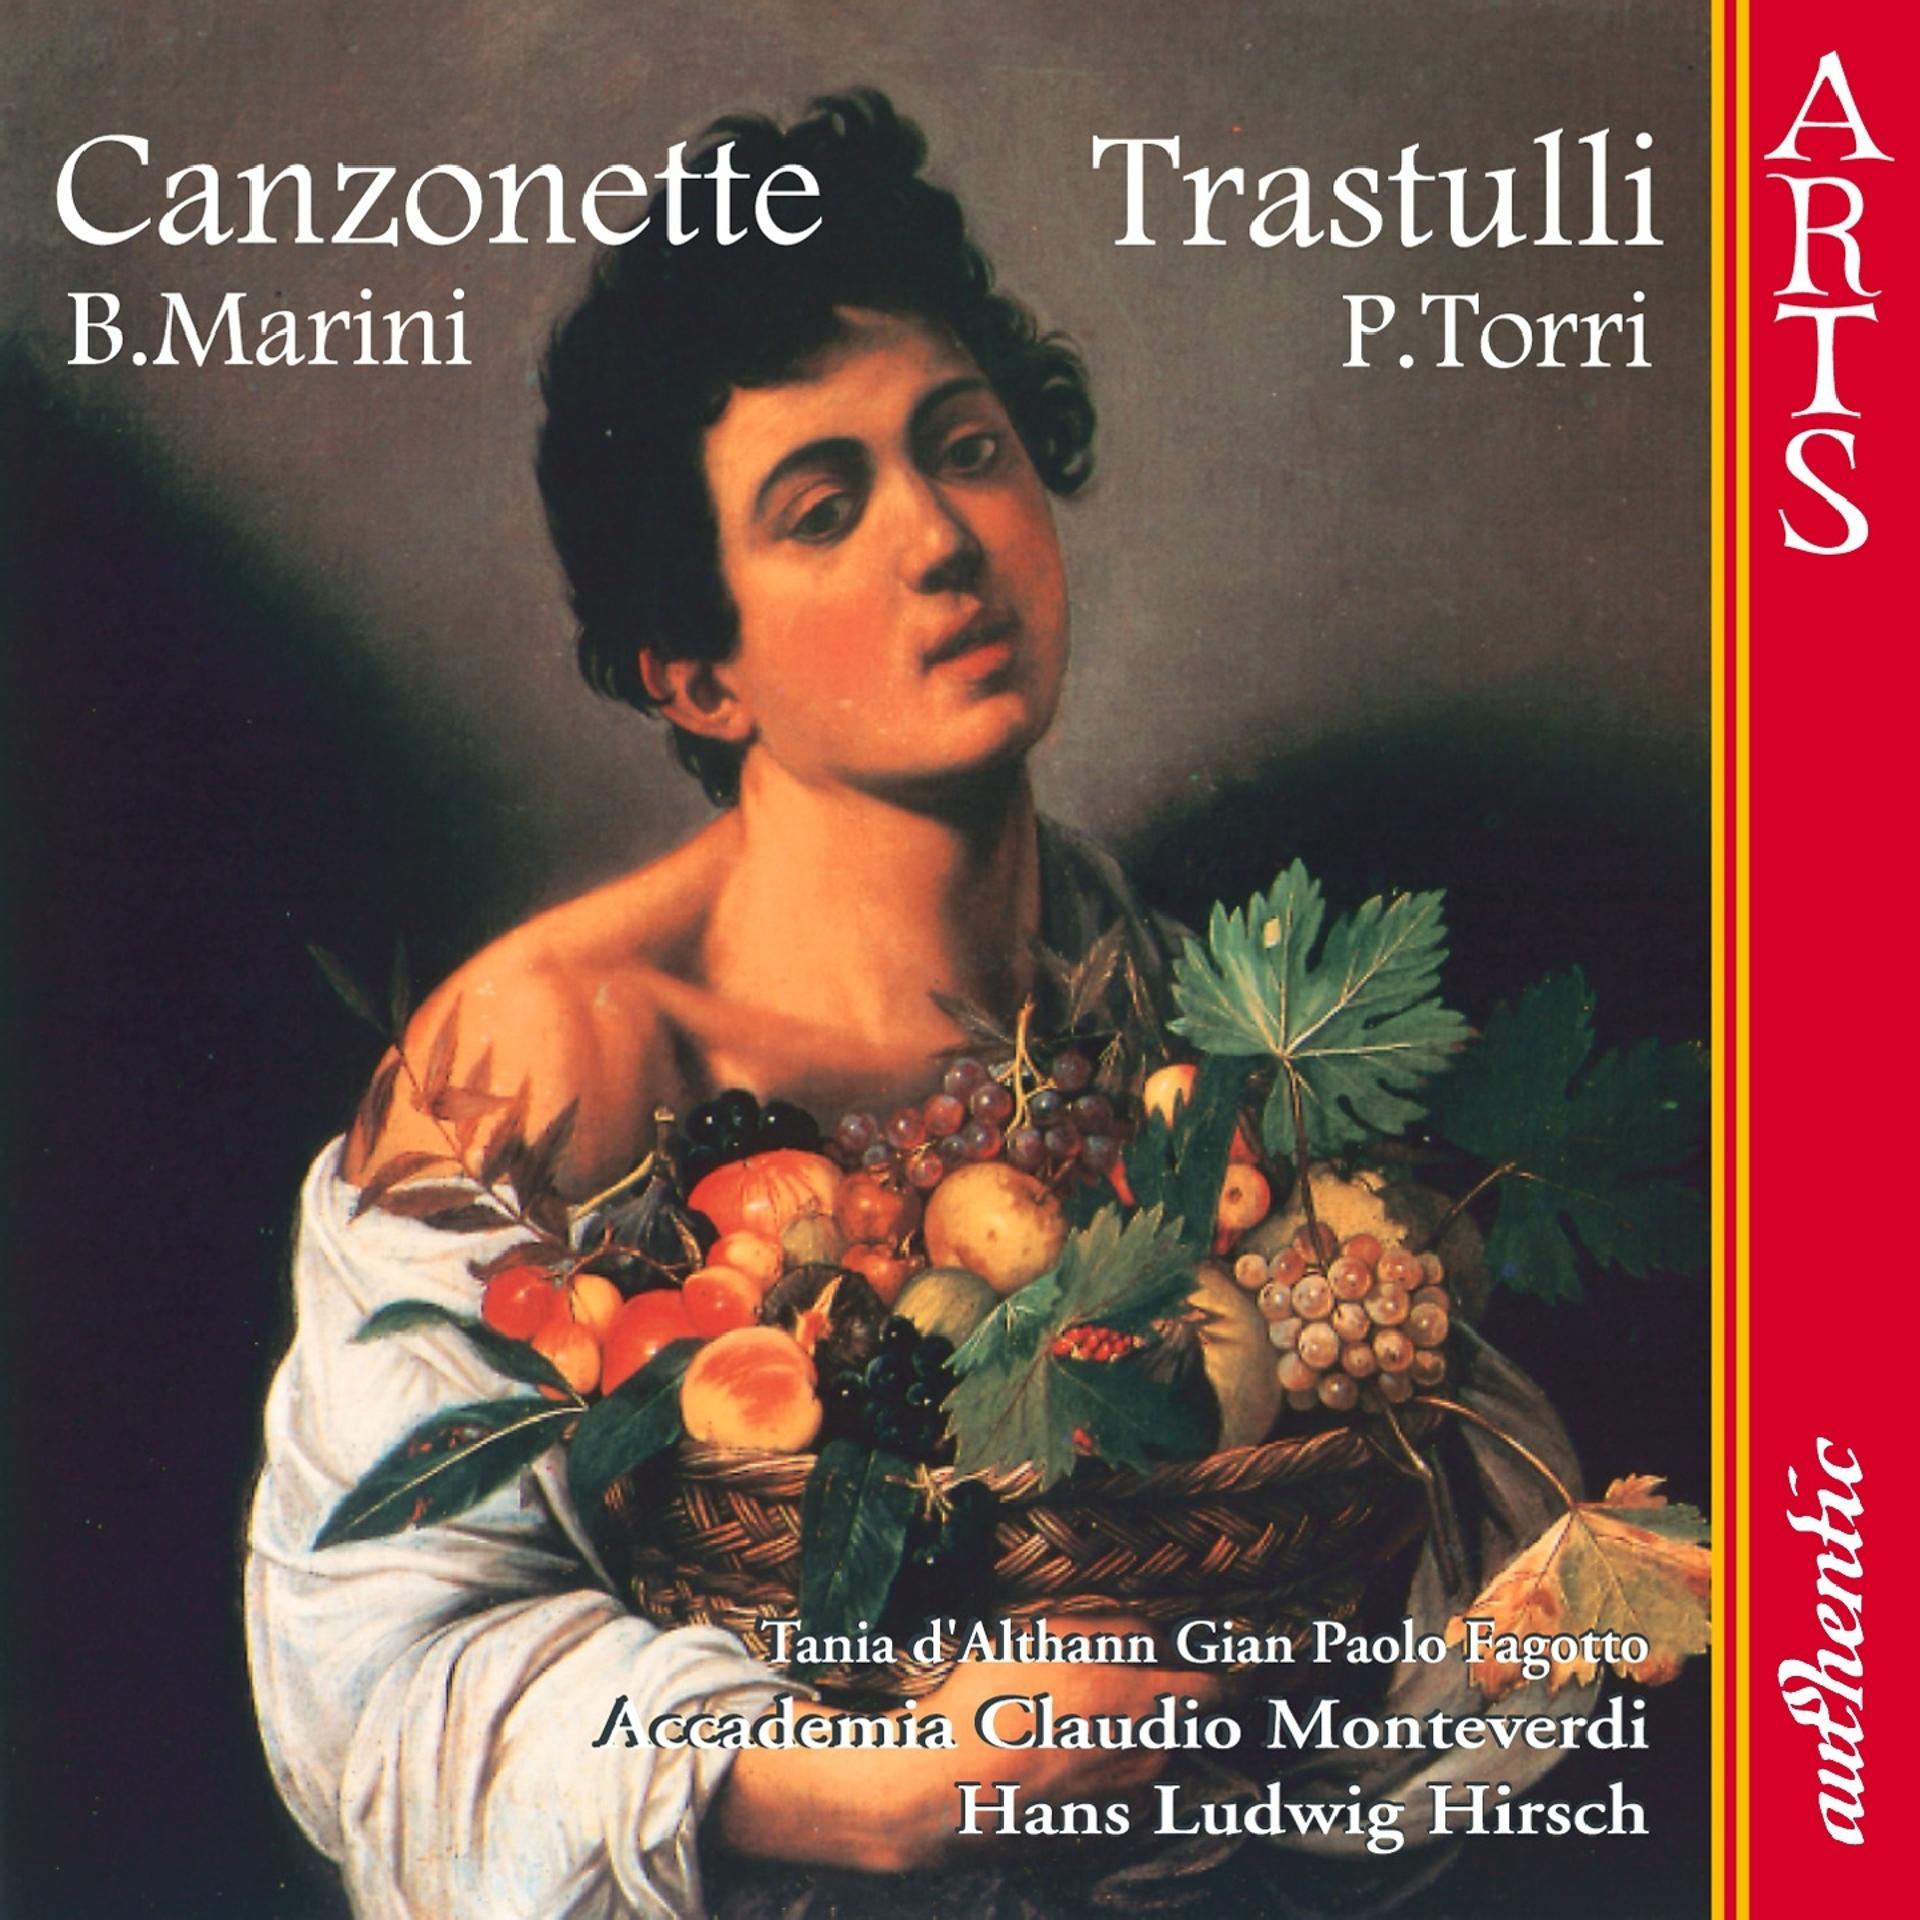 Постер к треку Accademia Claudio Monteverdi, Hans Ludwig Hirsch, Tania d'Althann, Gian Paolo Fagotto - Canzonette: Amante legato